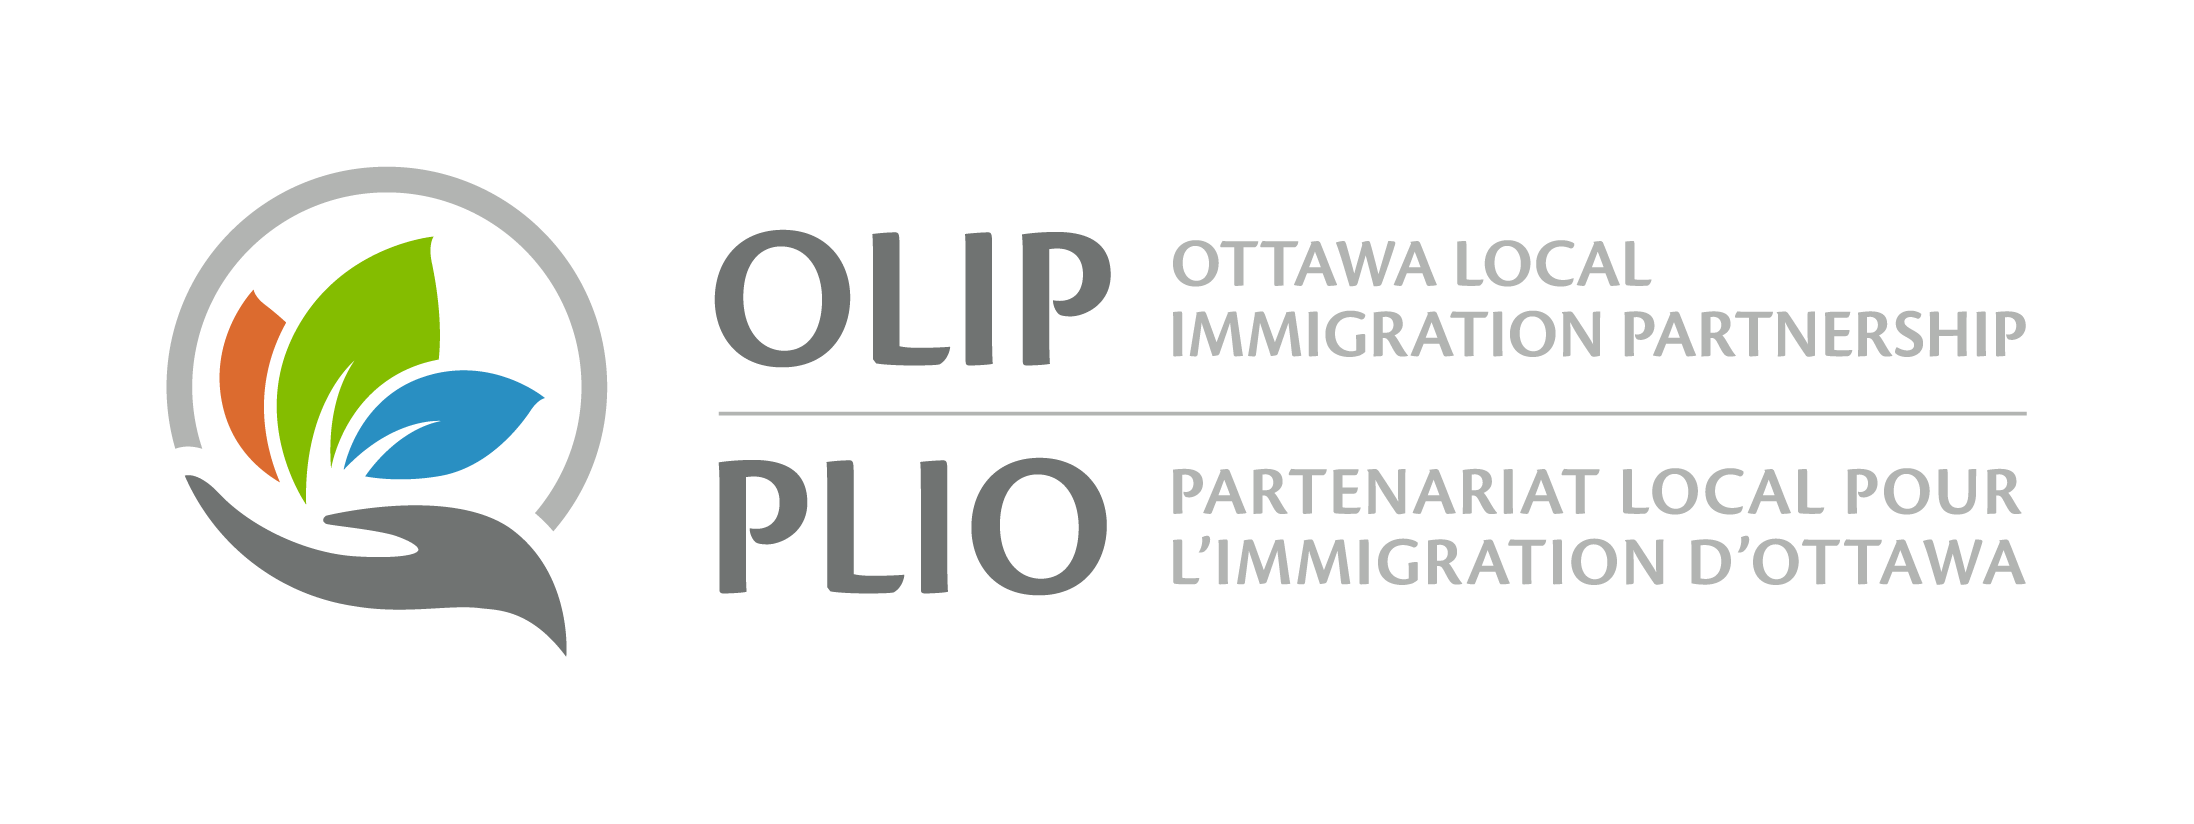 Partenariat Local pour l'immigration d'Ottawa - https://olip-plio.ca/fr/